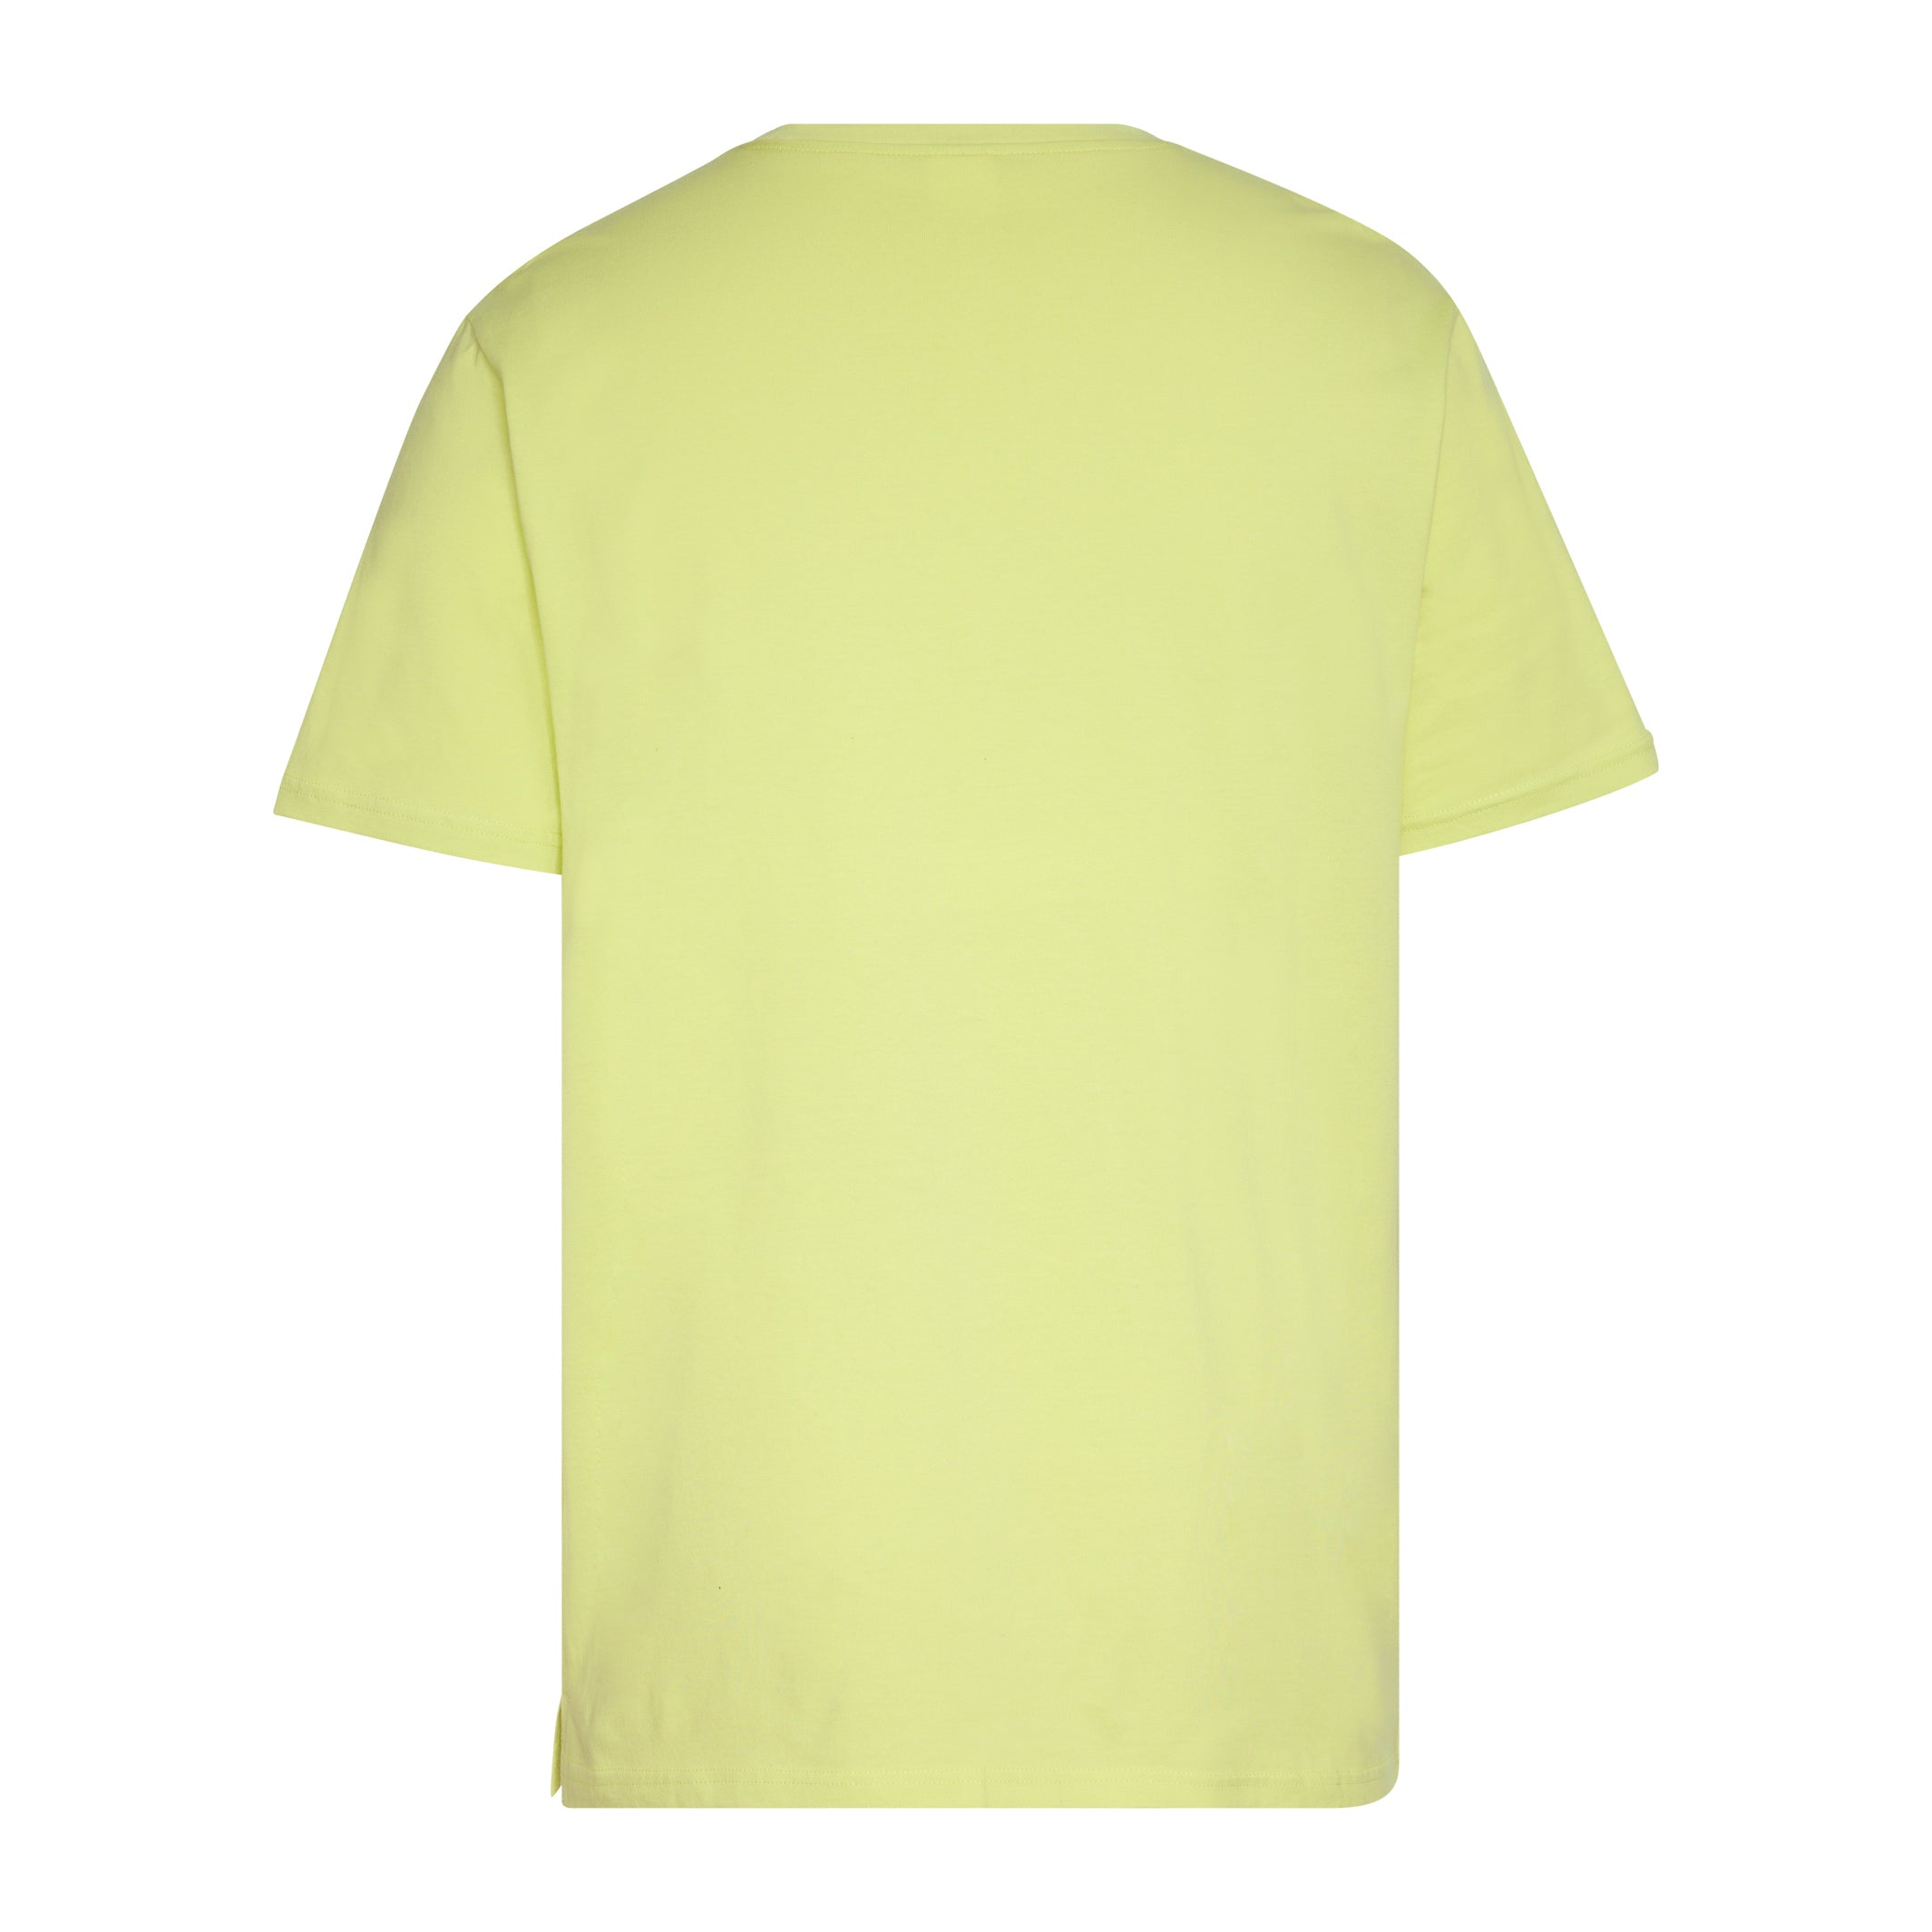 Men's Yellow T-Shirt SmileyWorld AO Tennis Balls Back View